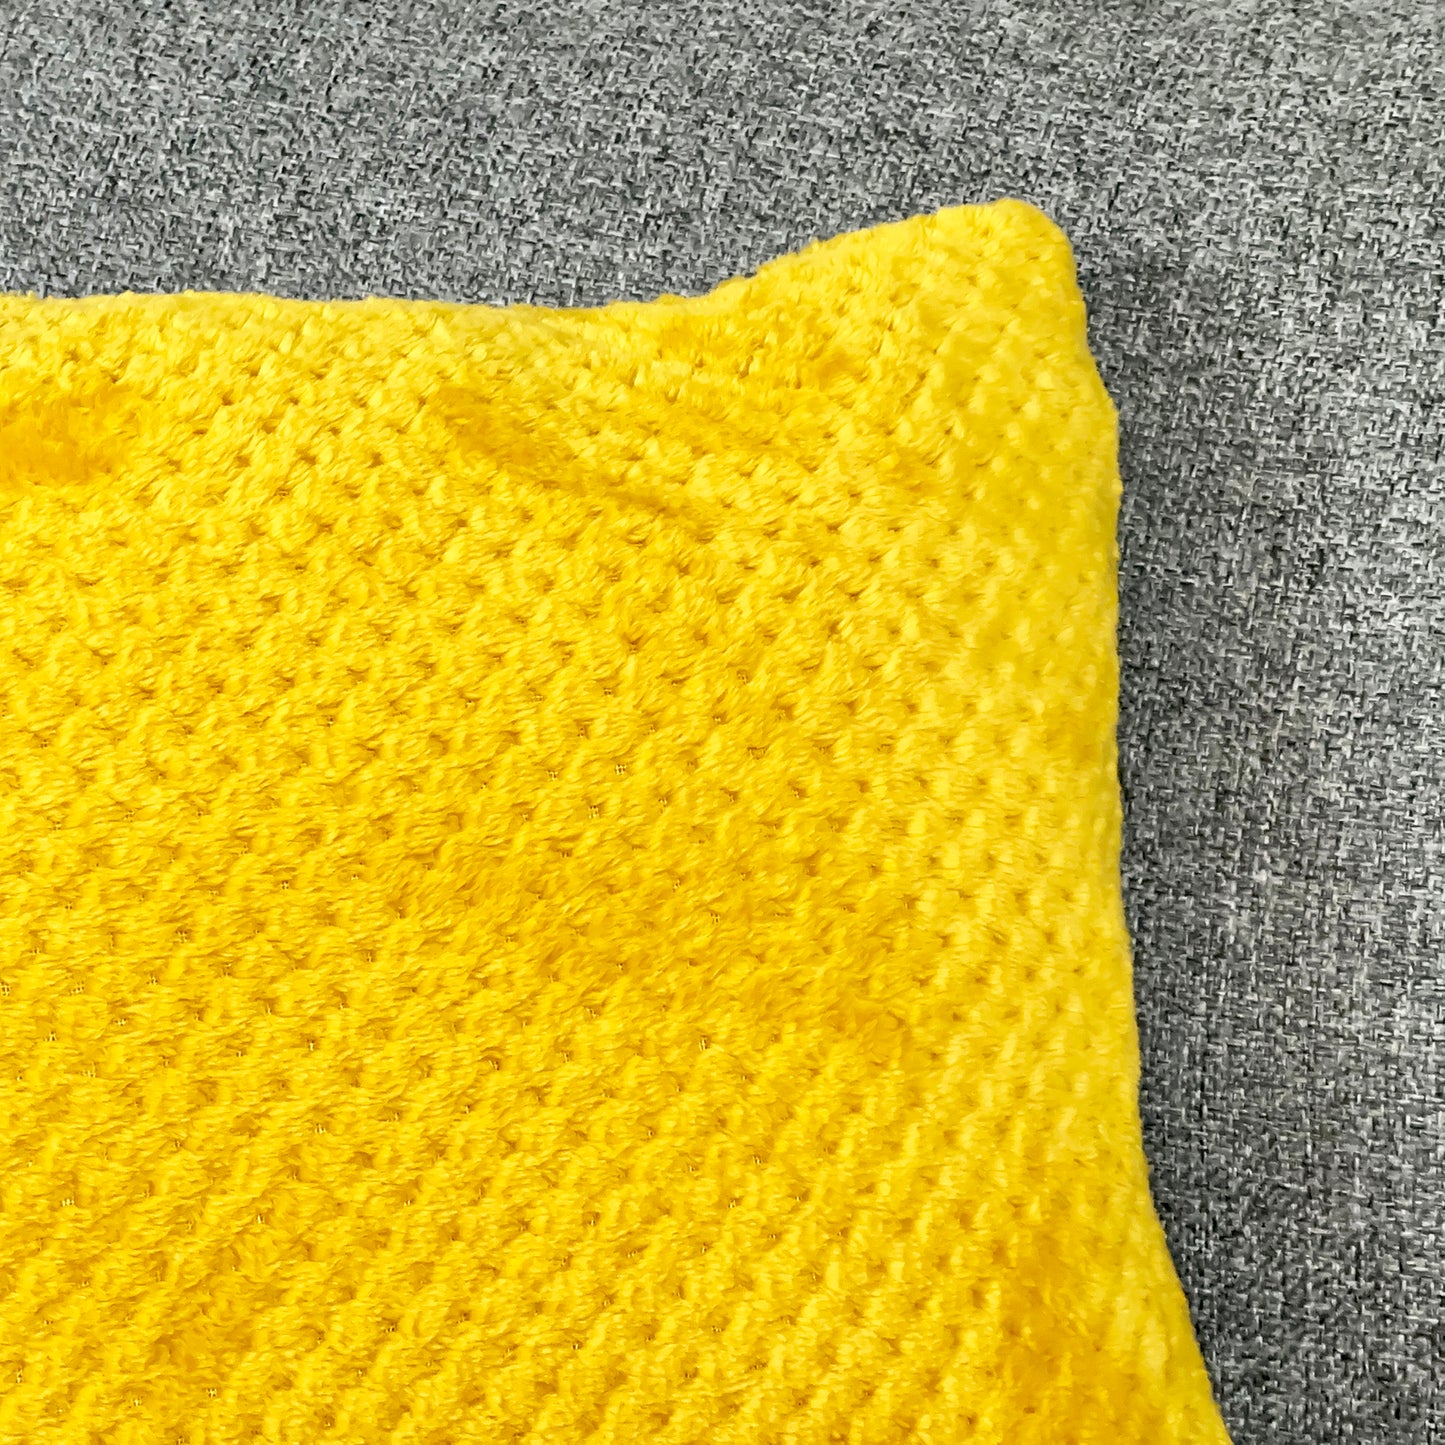 Yellow Textured Cushion